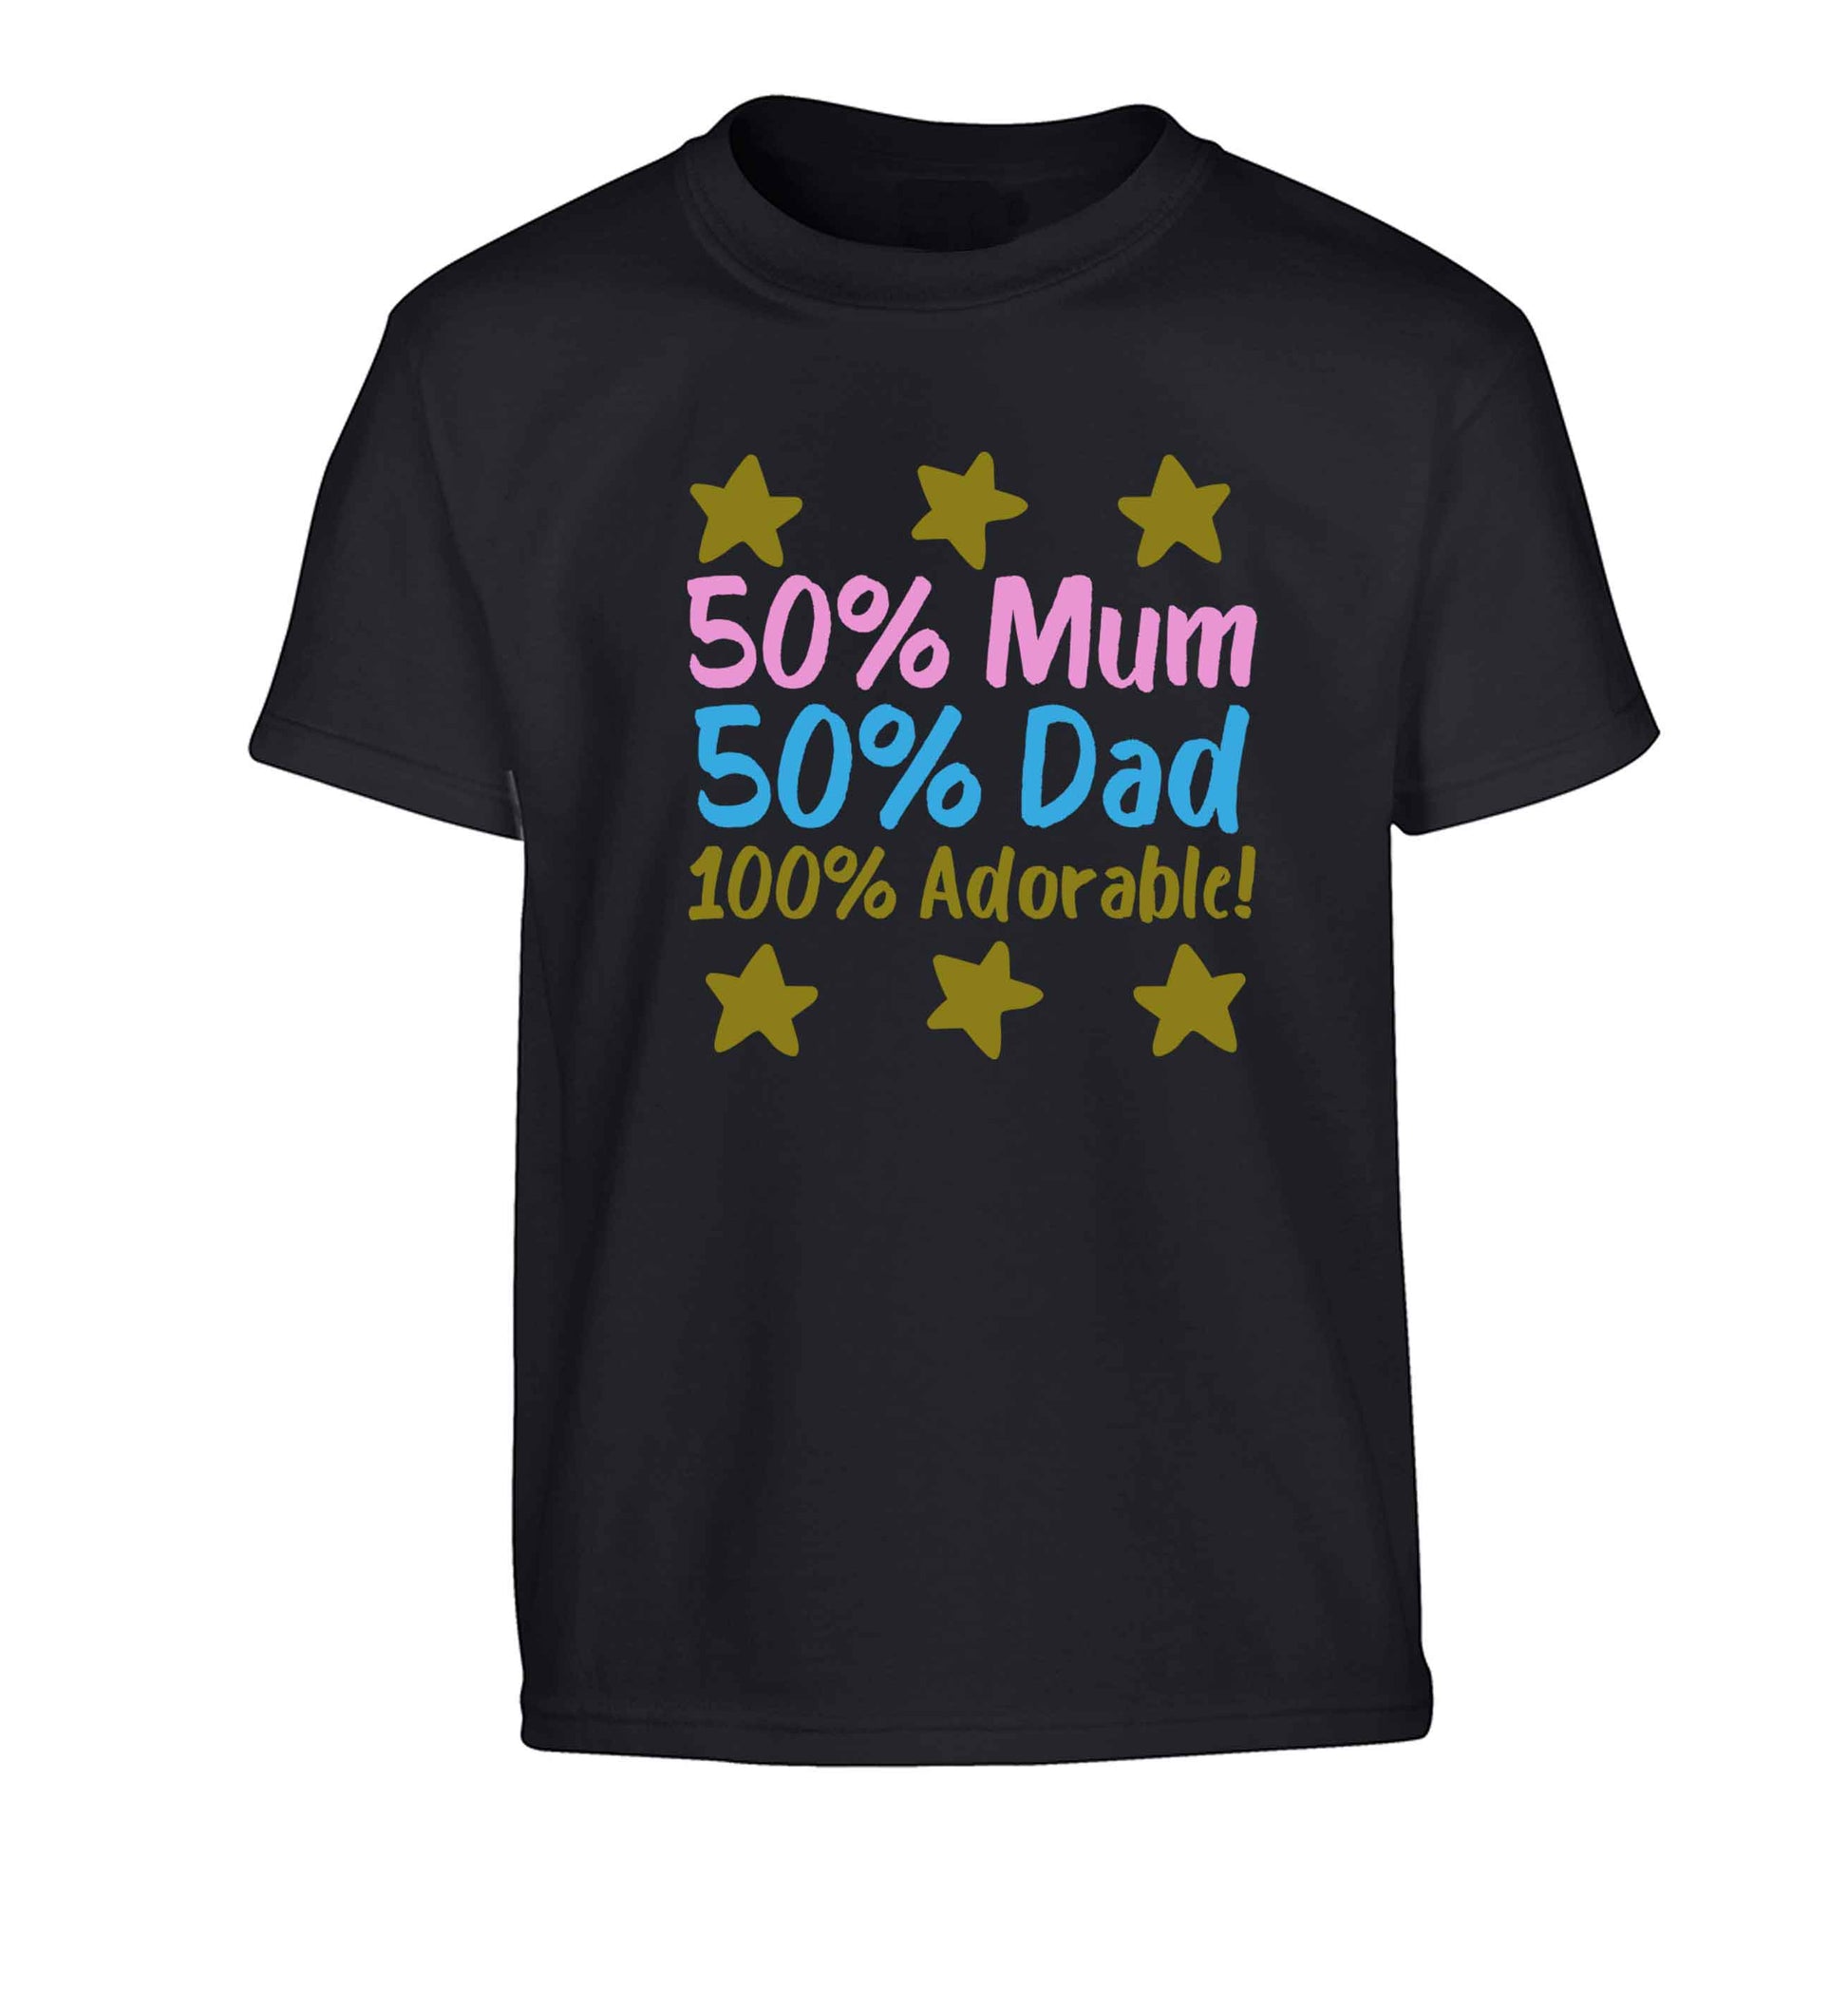 50% mum 50% dad 100% adorable Children's black Tshirt 12-13 Years